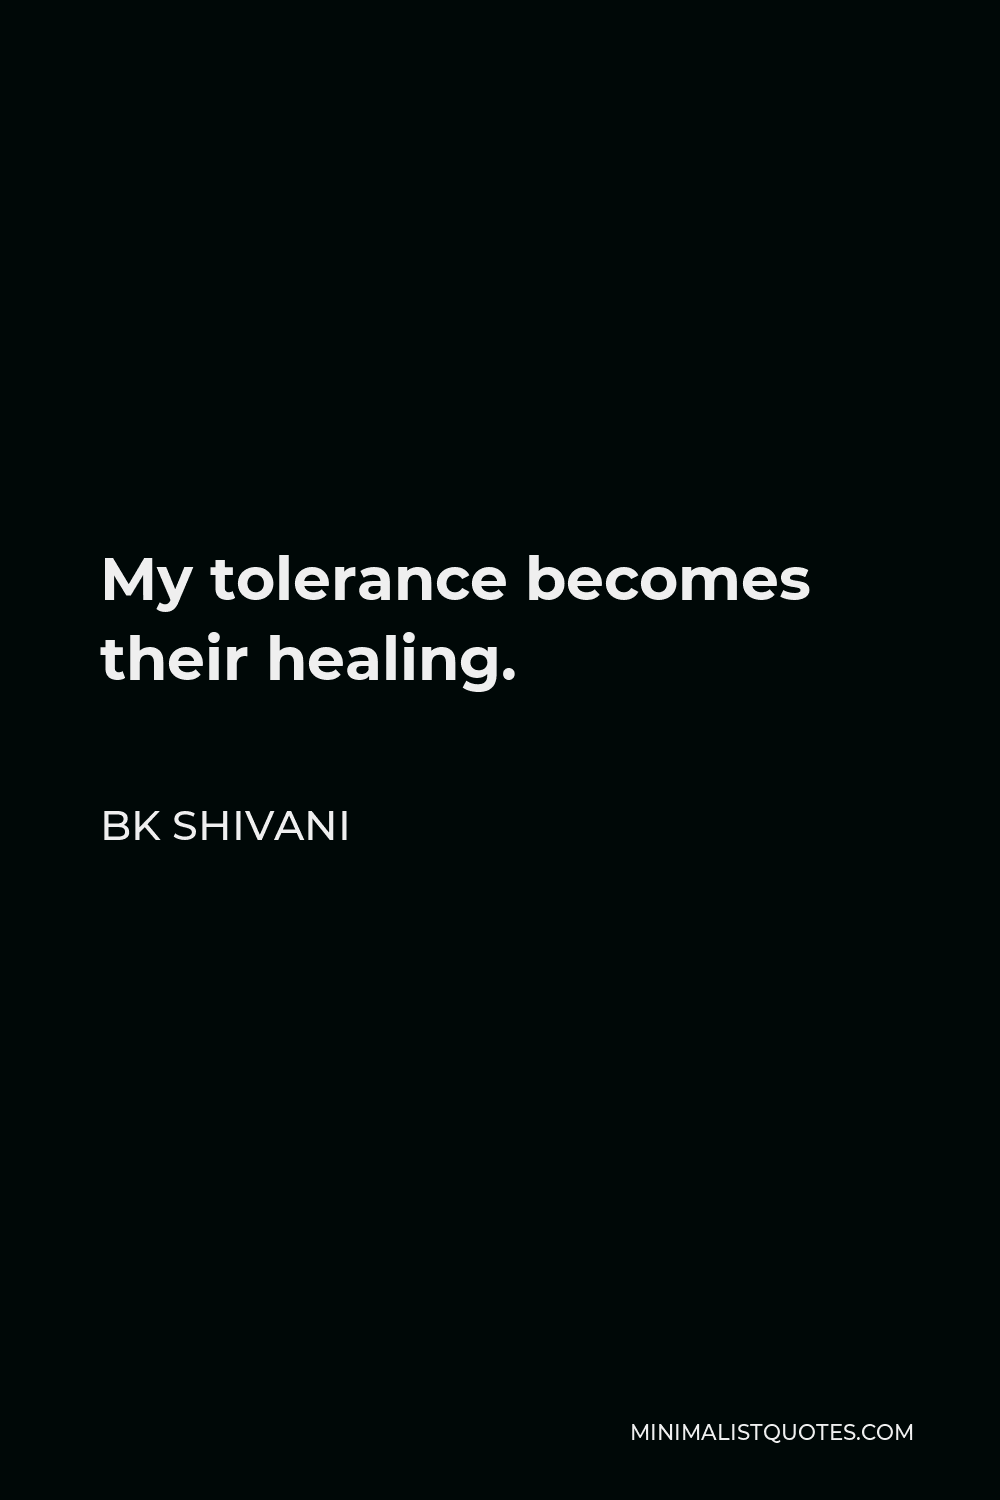 BK Shivani Quote: I take personal responsibility. I heal myself. I ...